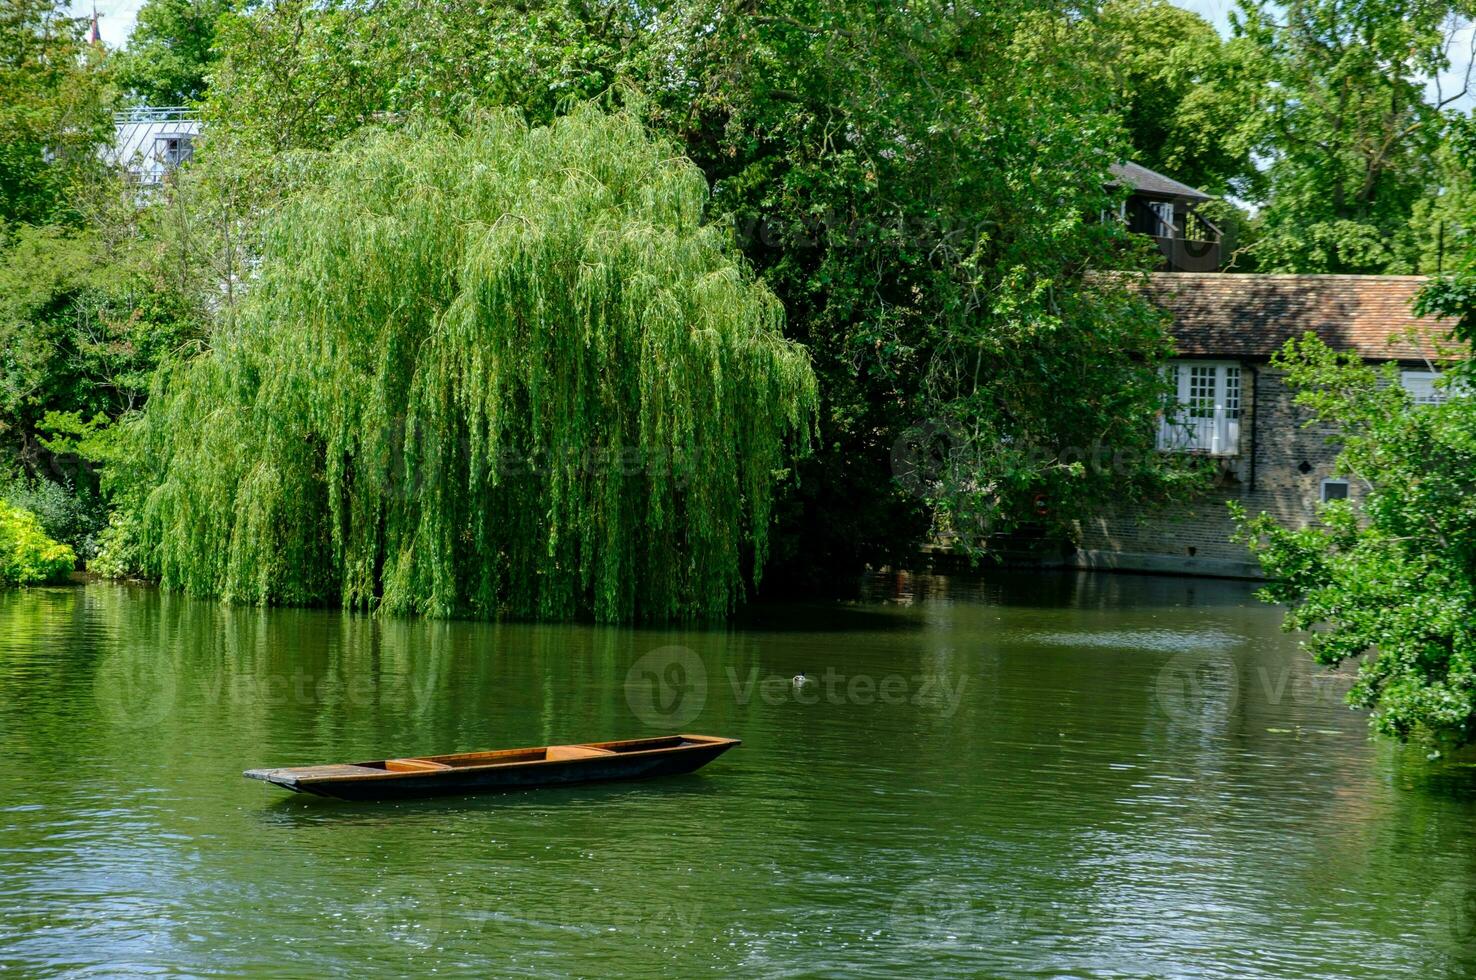 en punting båt driver förbi sig på flod kam i Cambridge, england. foto